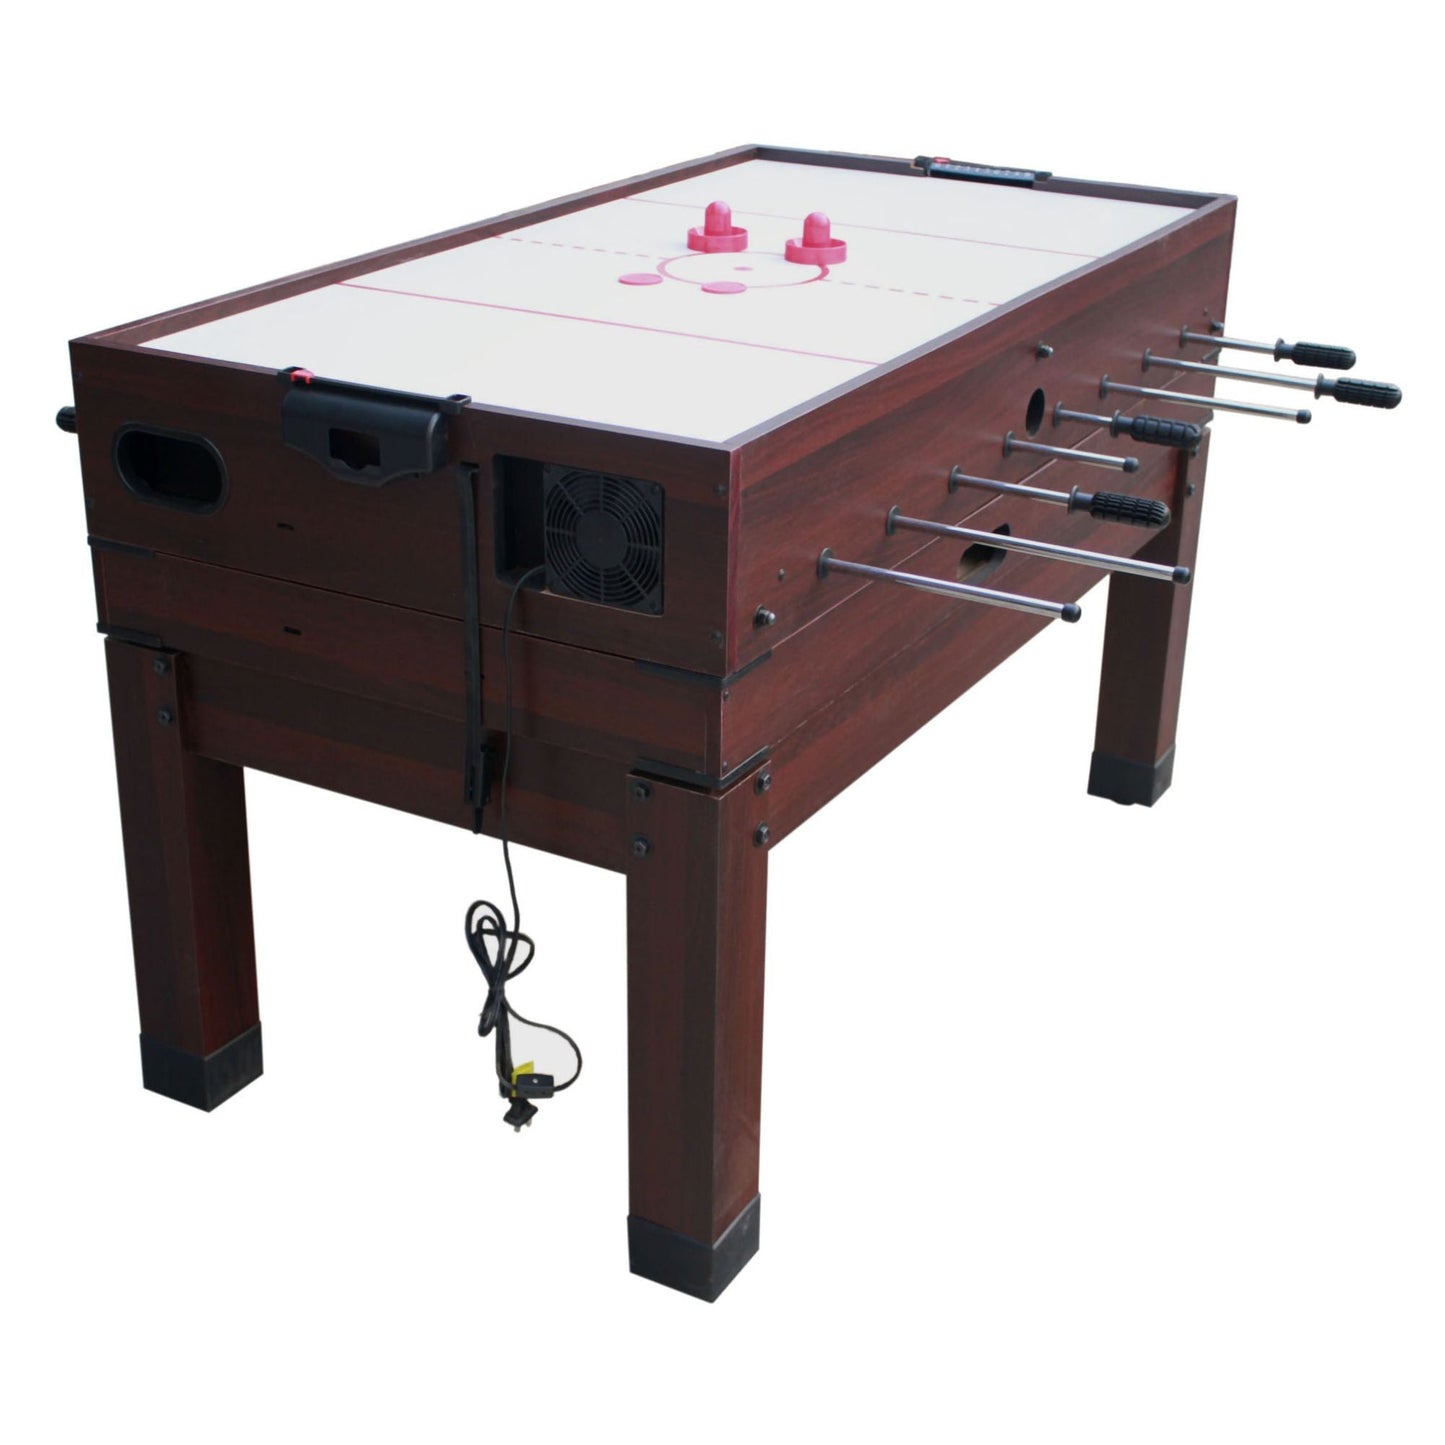 Playcraft Danbury 14 in 1 Multi-Game Table - Upper Livin